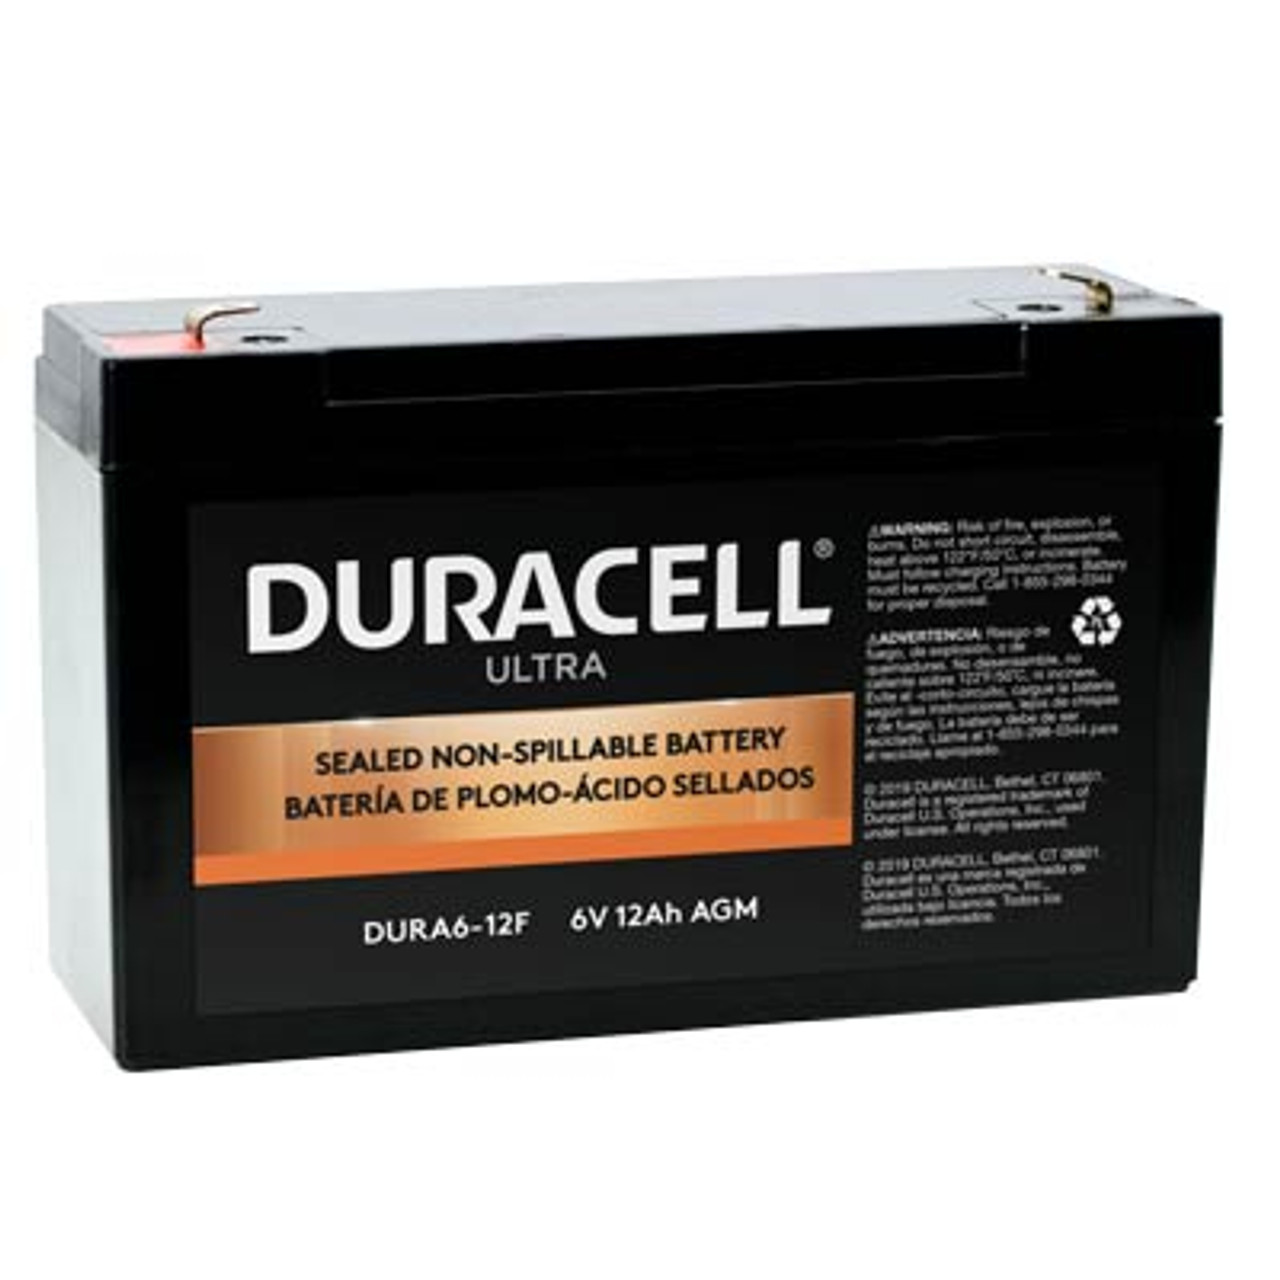 F battery. Duracell Platinum AGM. Батарейка f10. Duracell de aux 14 Ah AGM L (Battery).